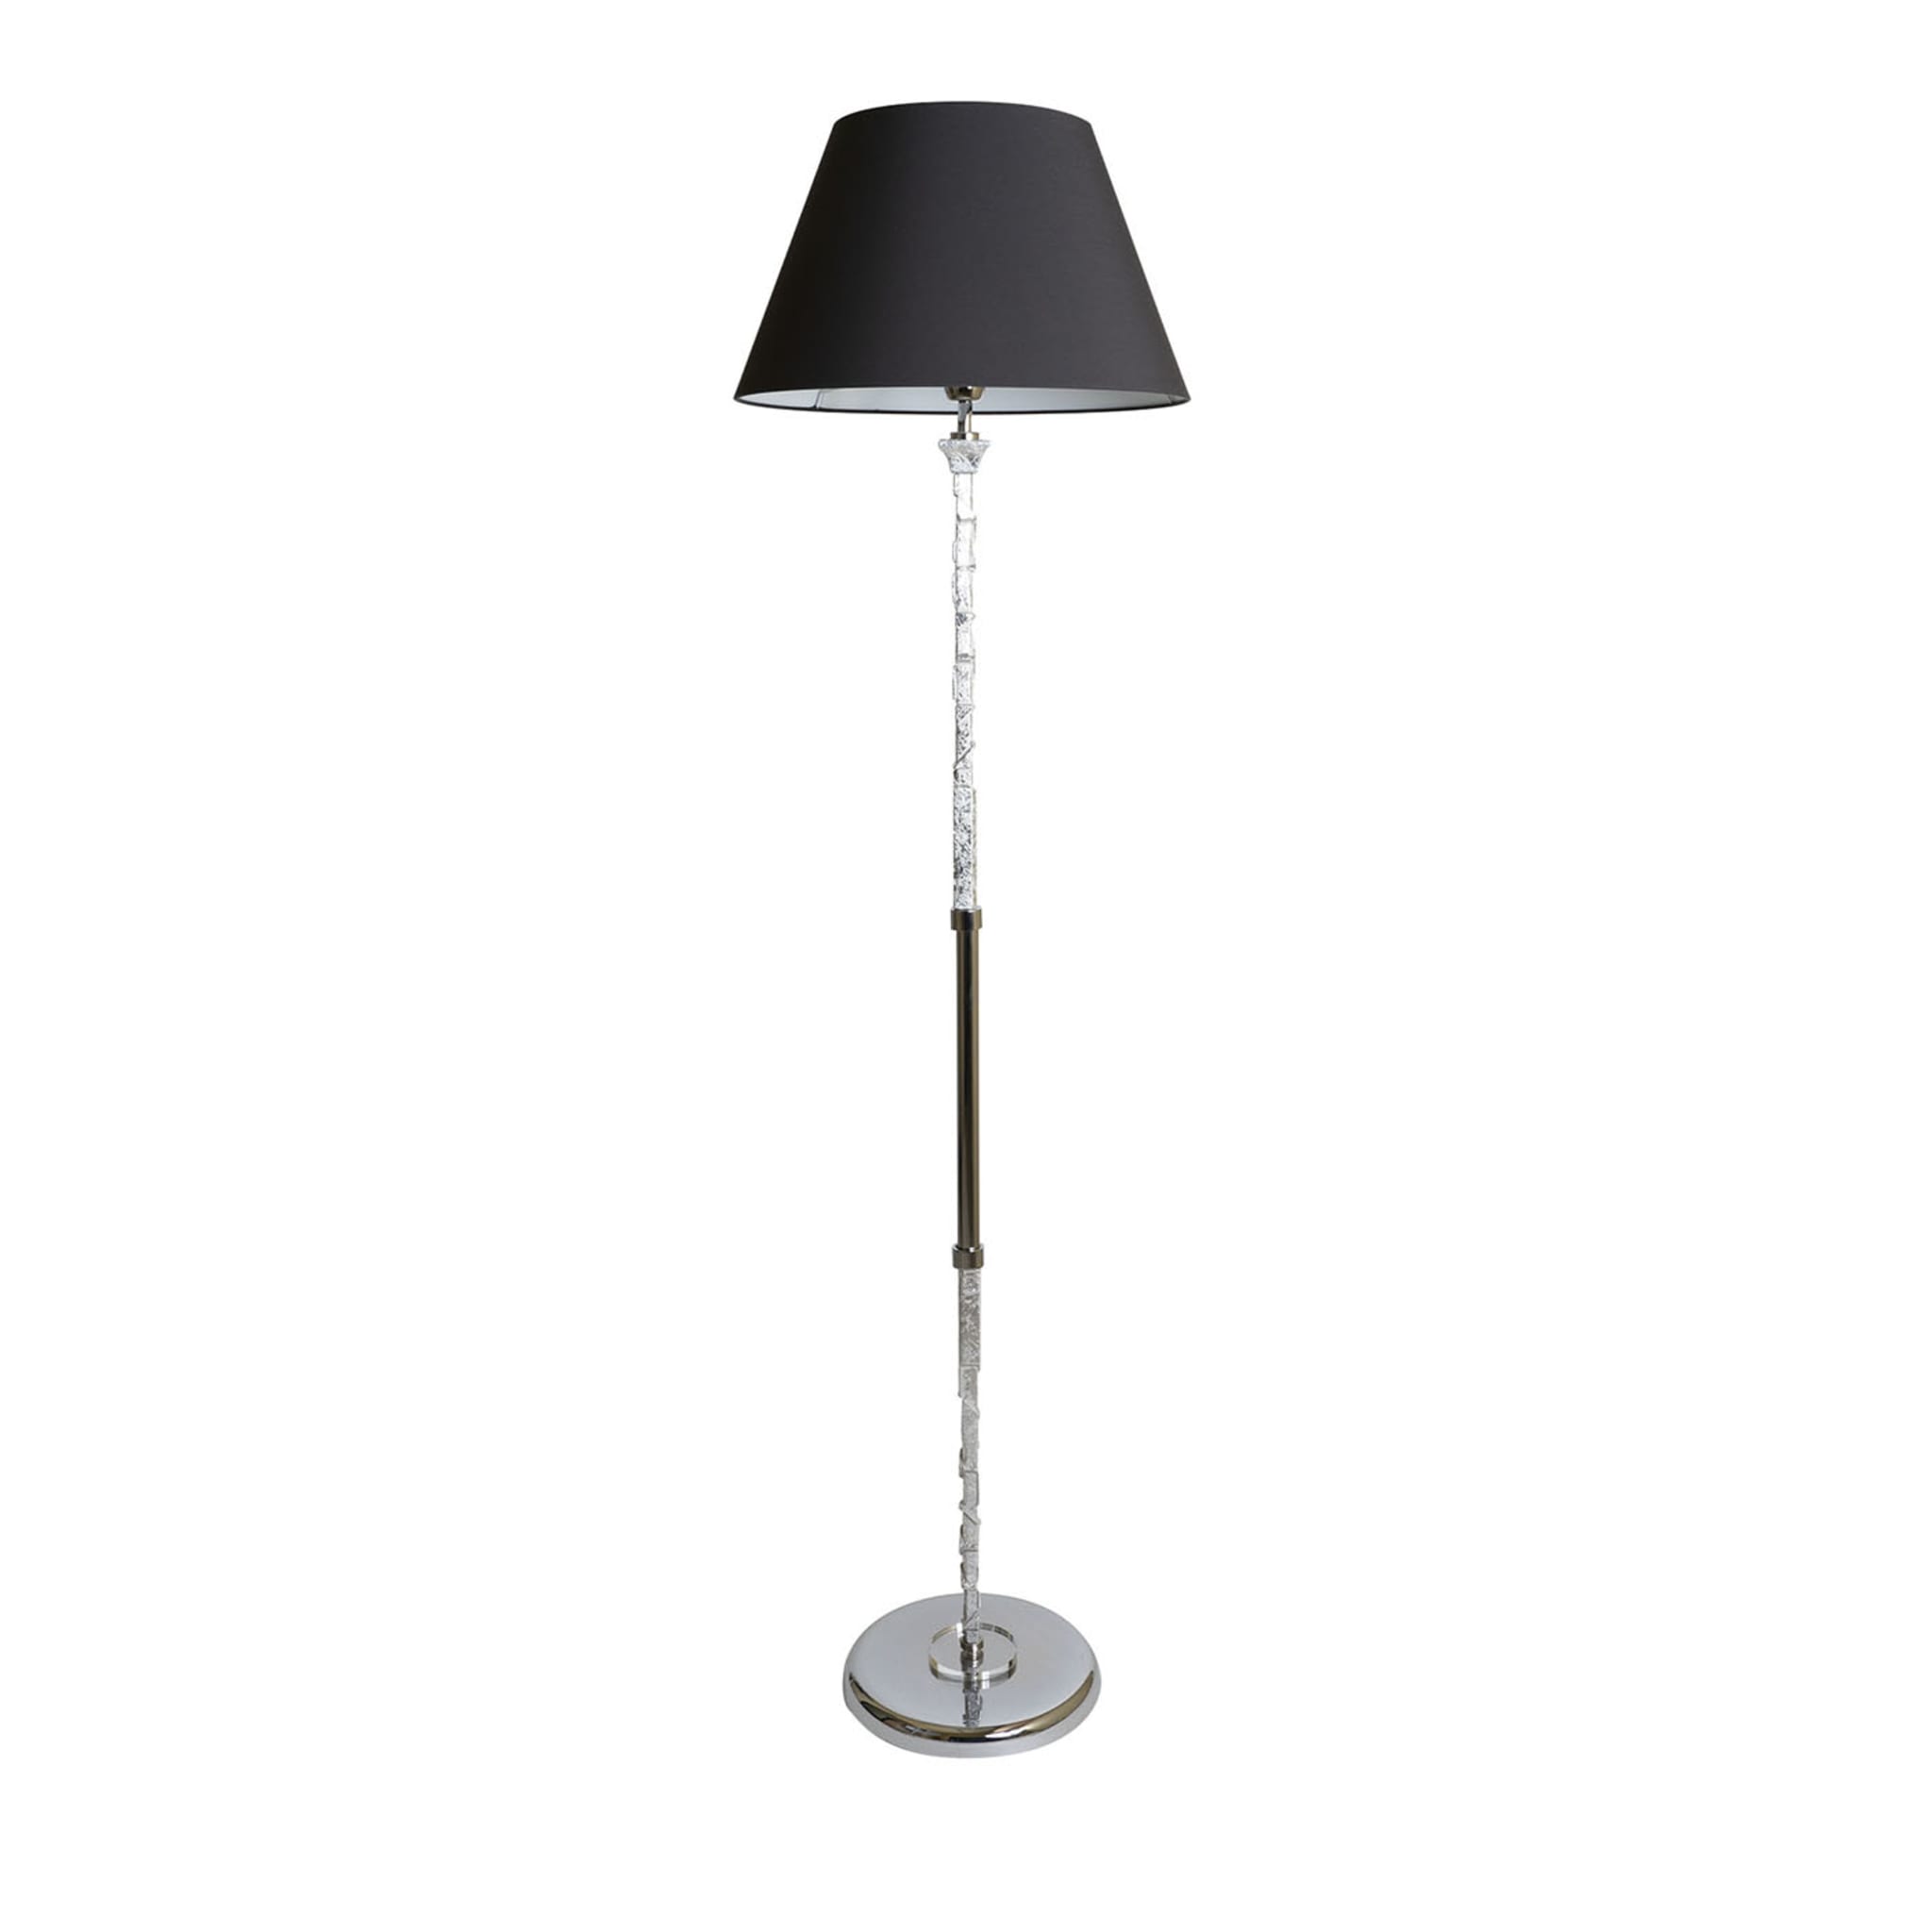 Anthracite-Gray Chromed Floor Lamp - Main view